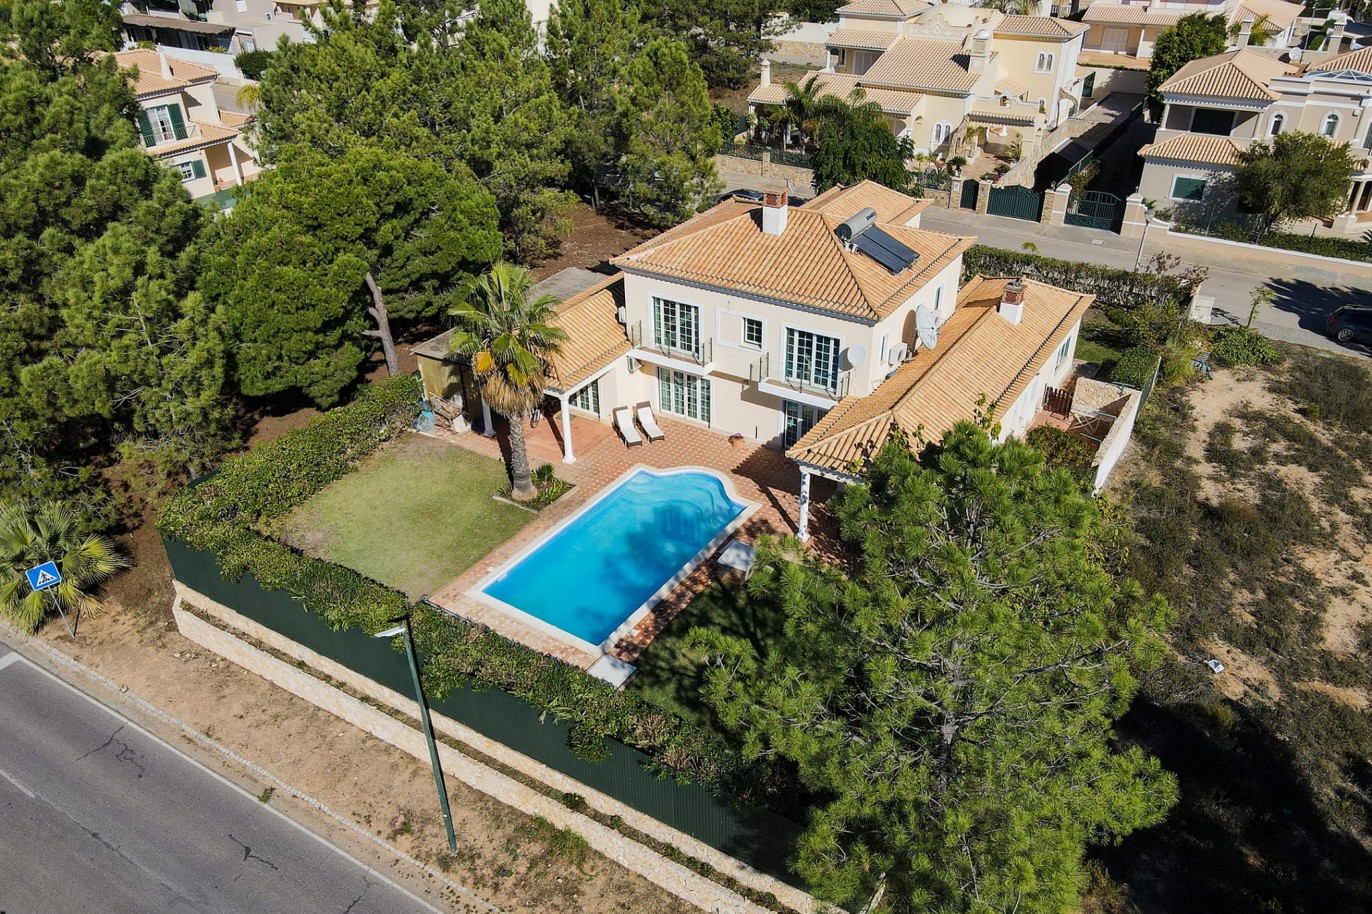 Moradia V4, com piscina, para venda, em Vila Sol, Algarve_204072